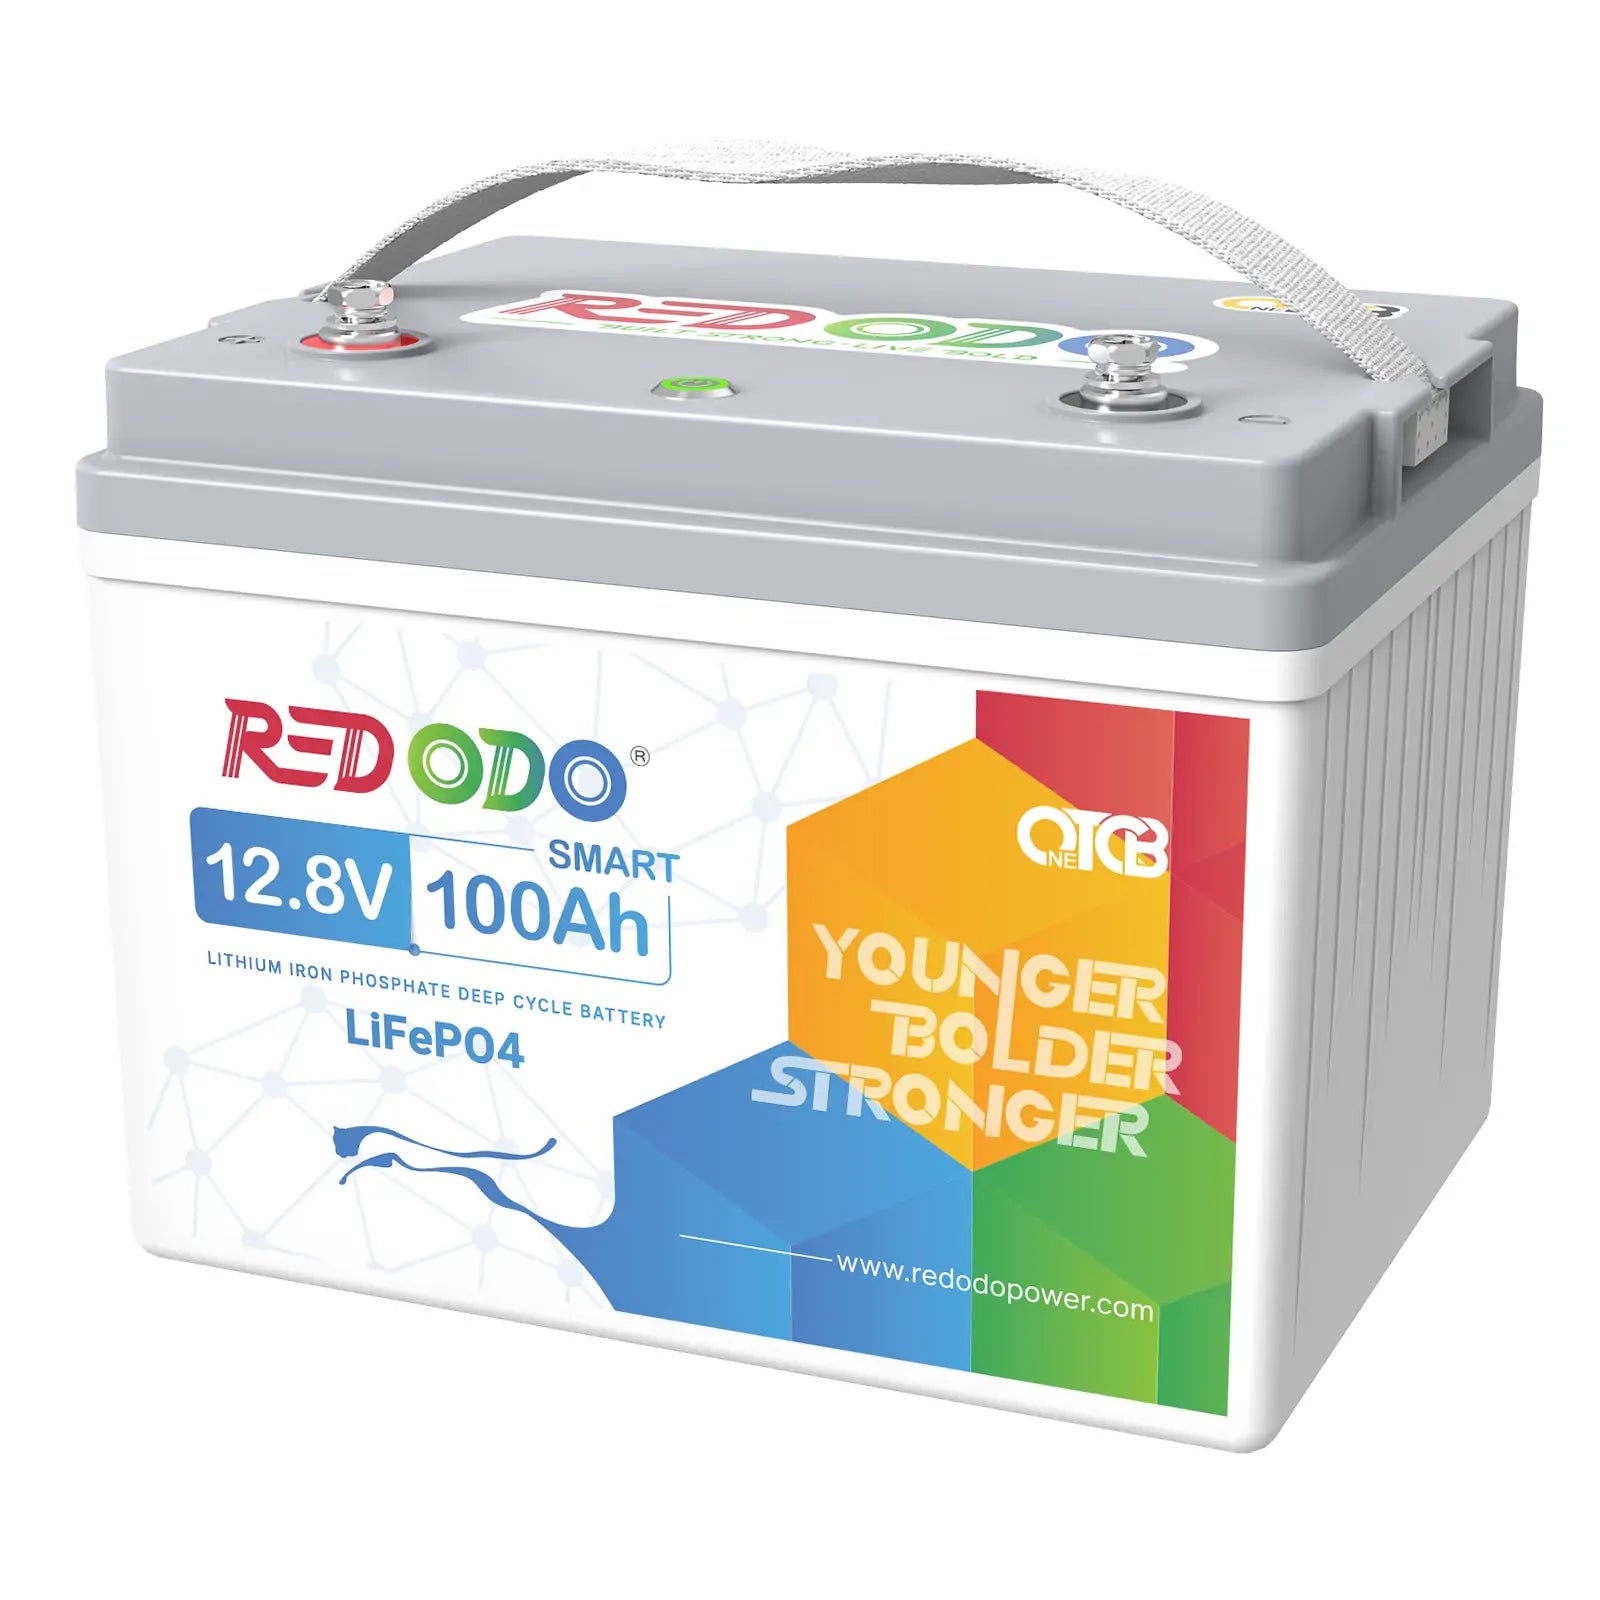 Redodo 12.8V 100Ah Smart LiFePO4 Battery | 1.28kWh & 1.28kW, One